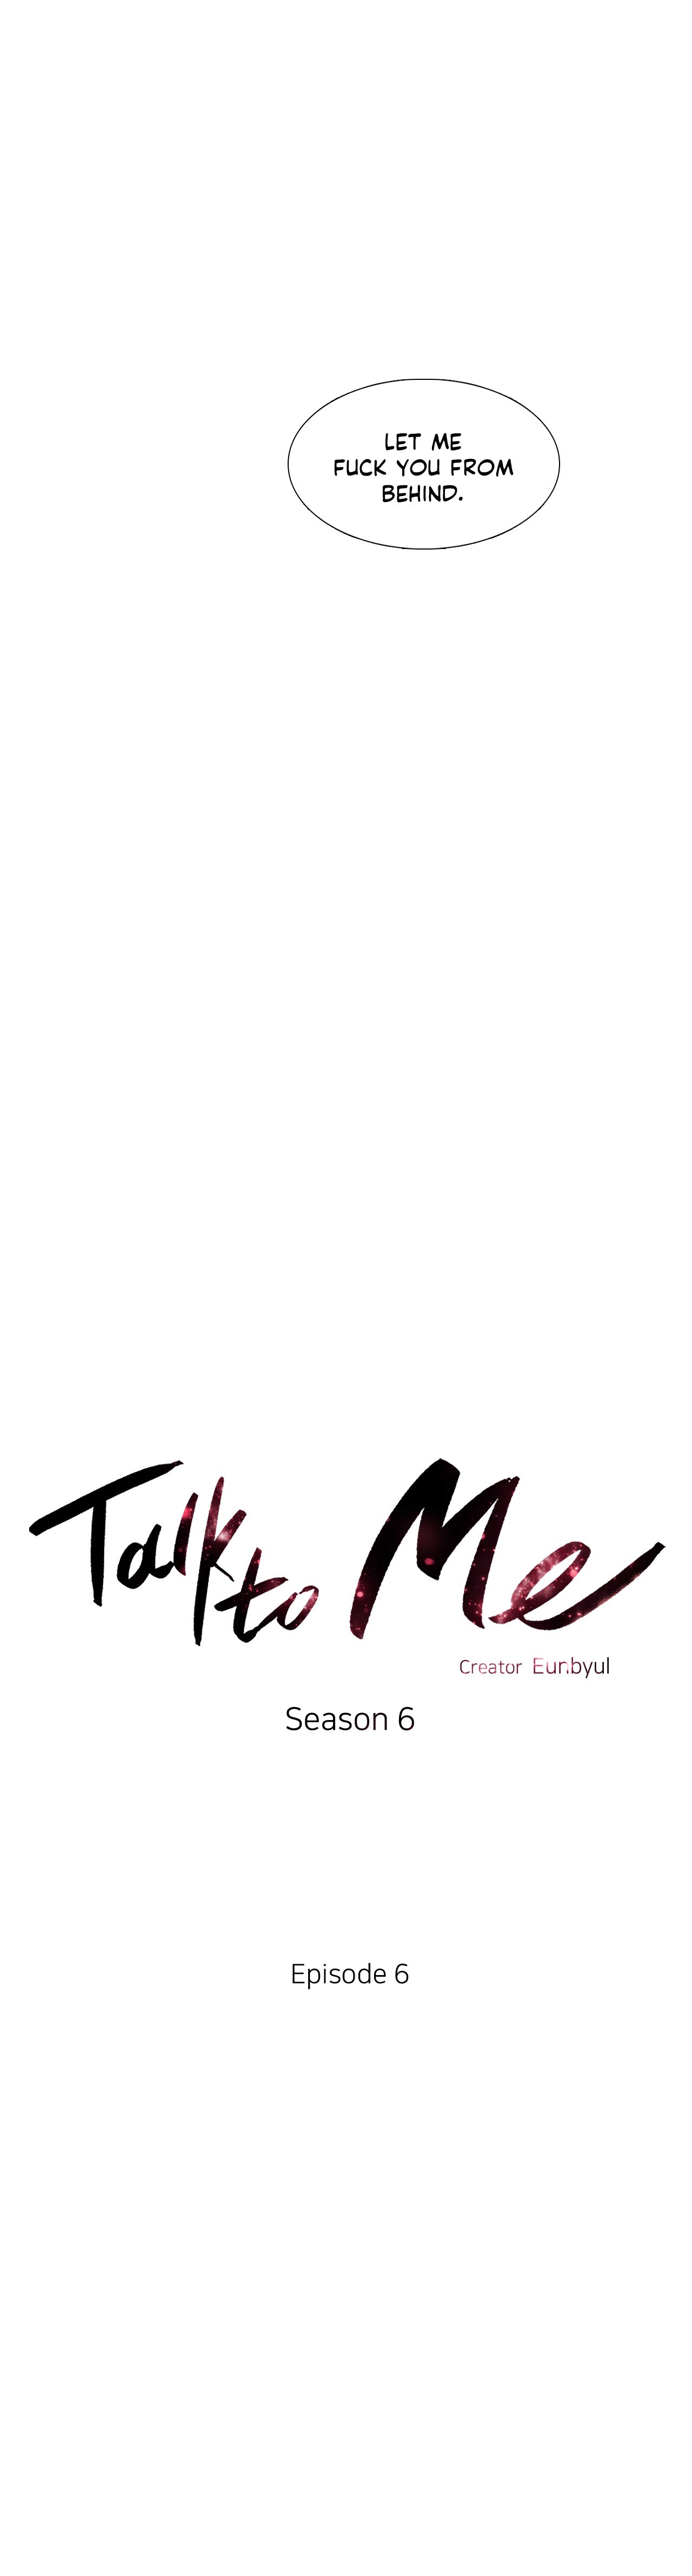 Talk to Me image